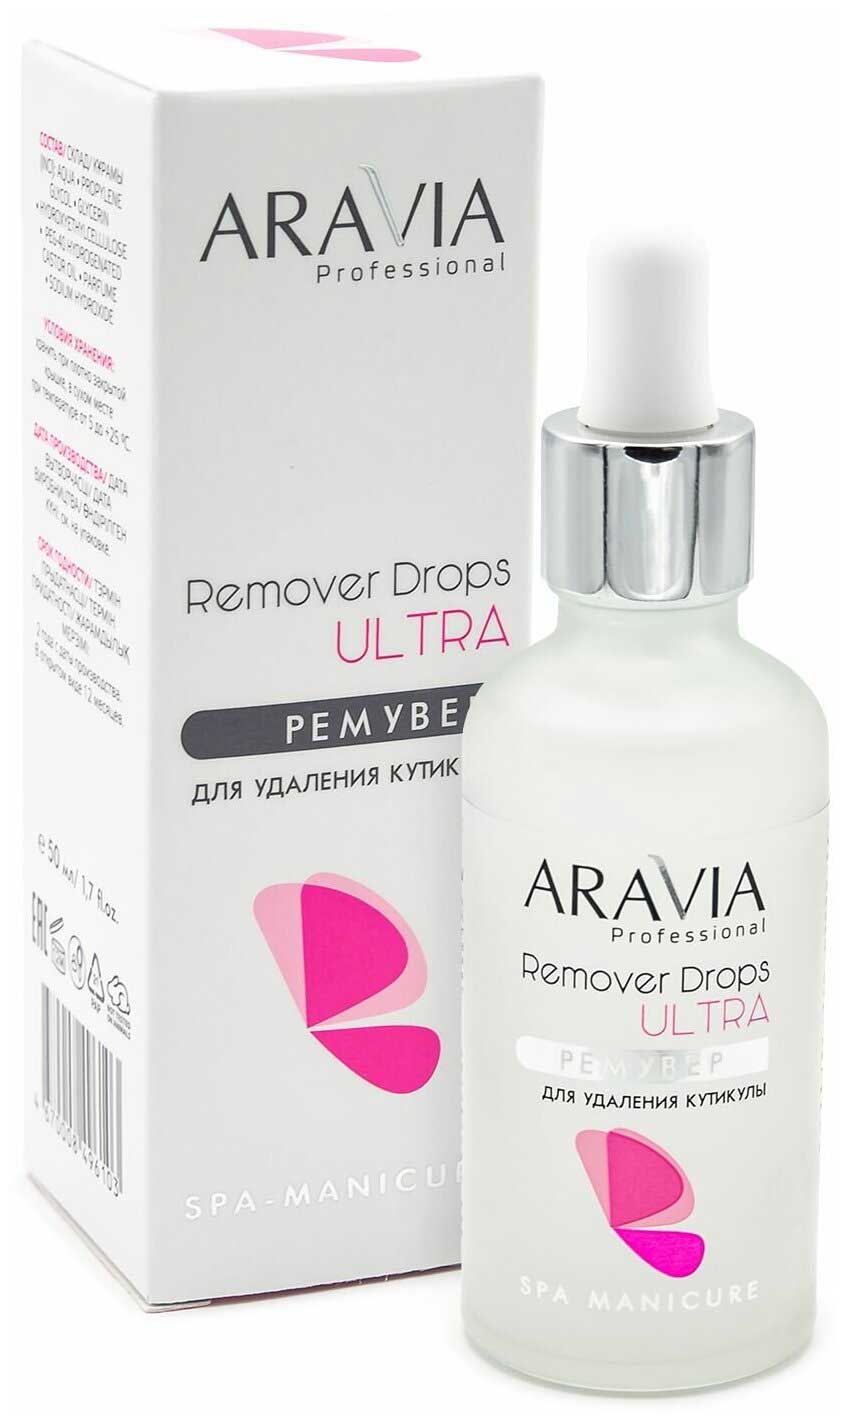 Ремувер для удаления кутикулы ARAVIA Professional Remover Drops Ultra 50мл